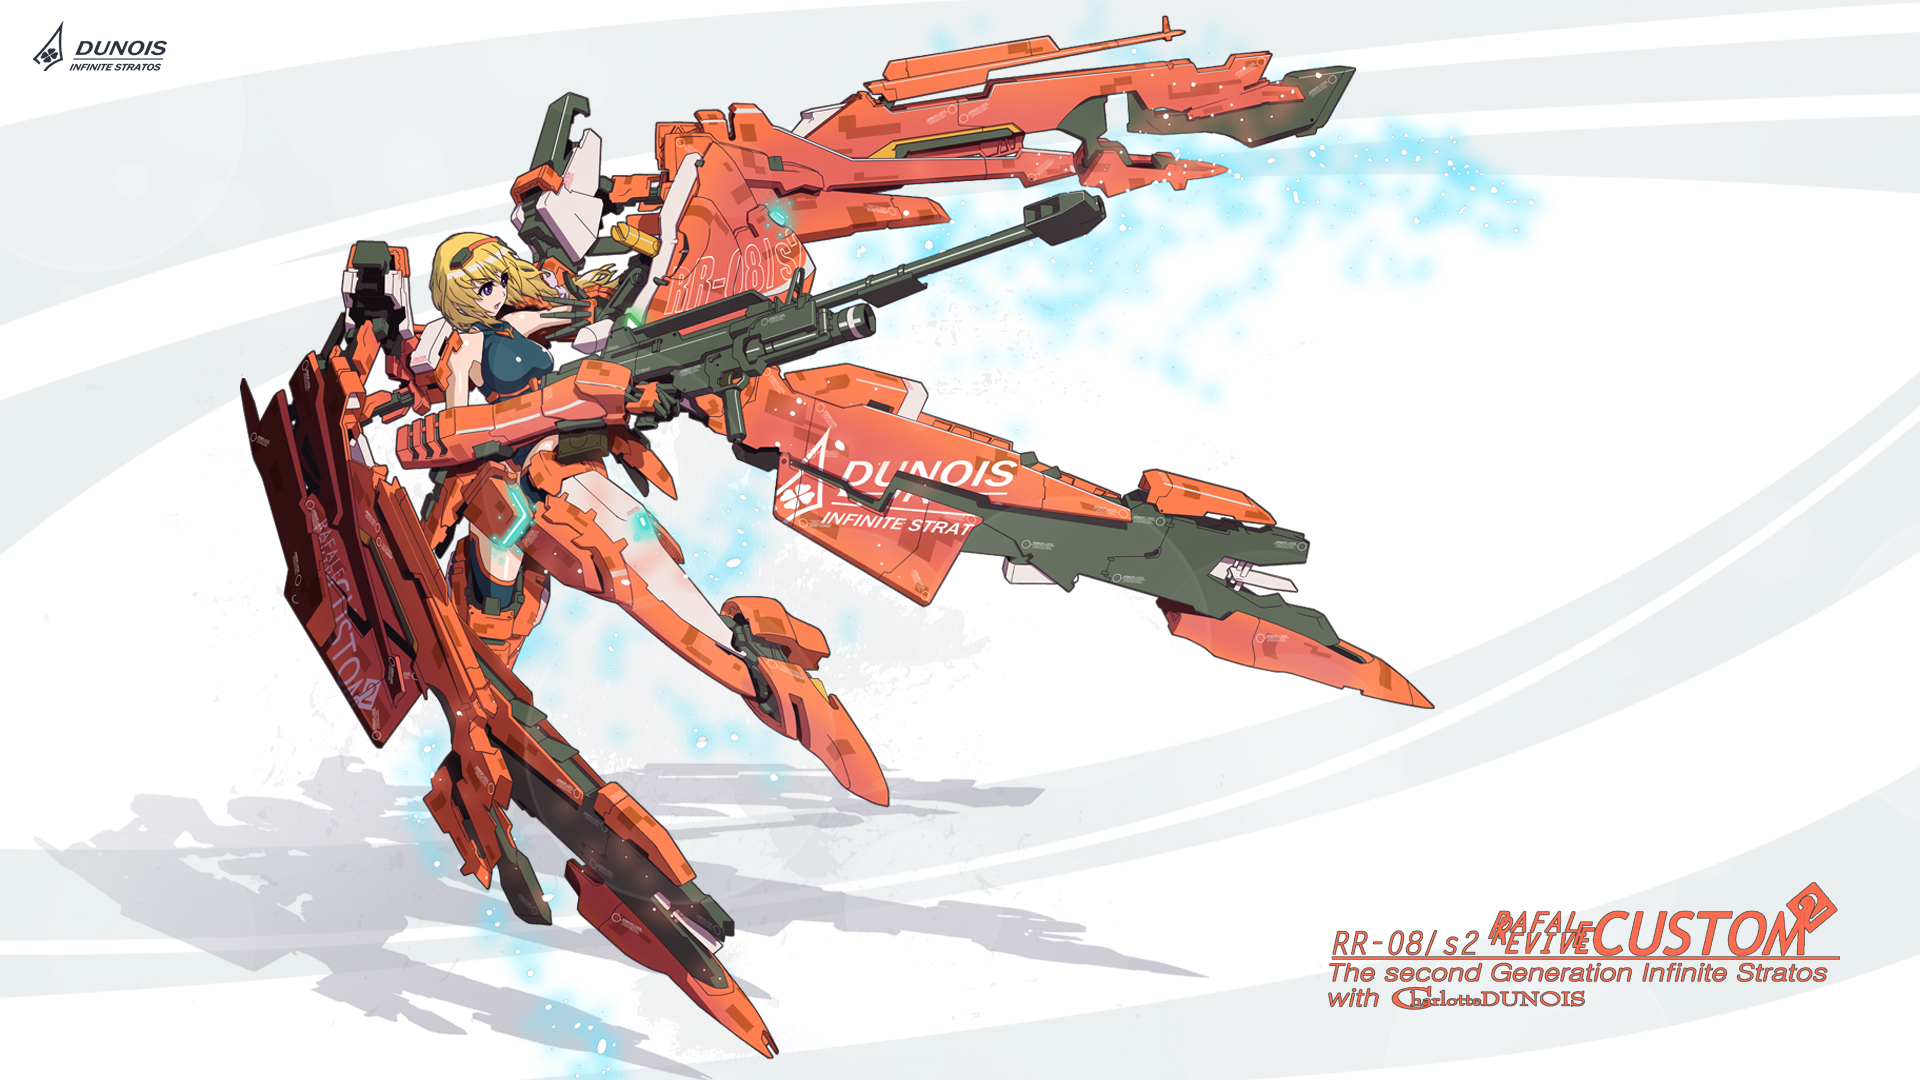 Dunois Gun Infinite Stratos Mecha Nenchi Weapon Wallpaper Background